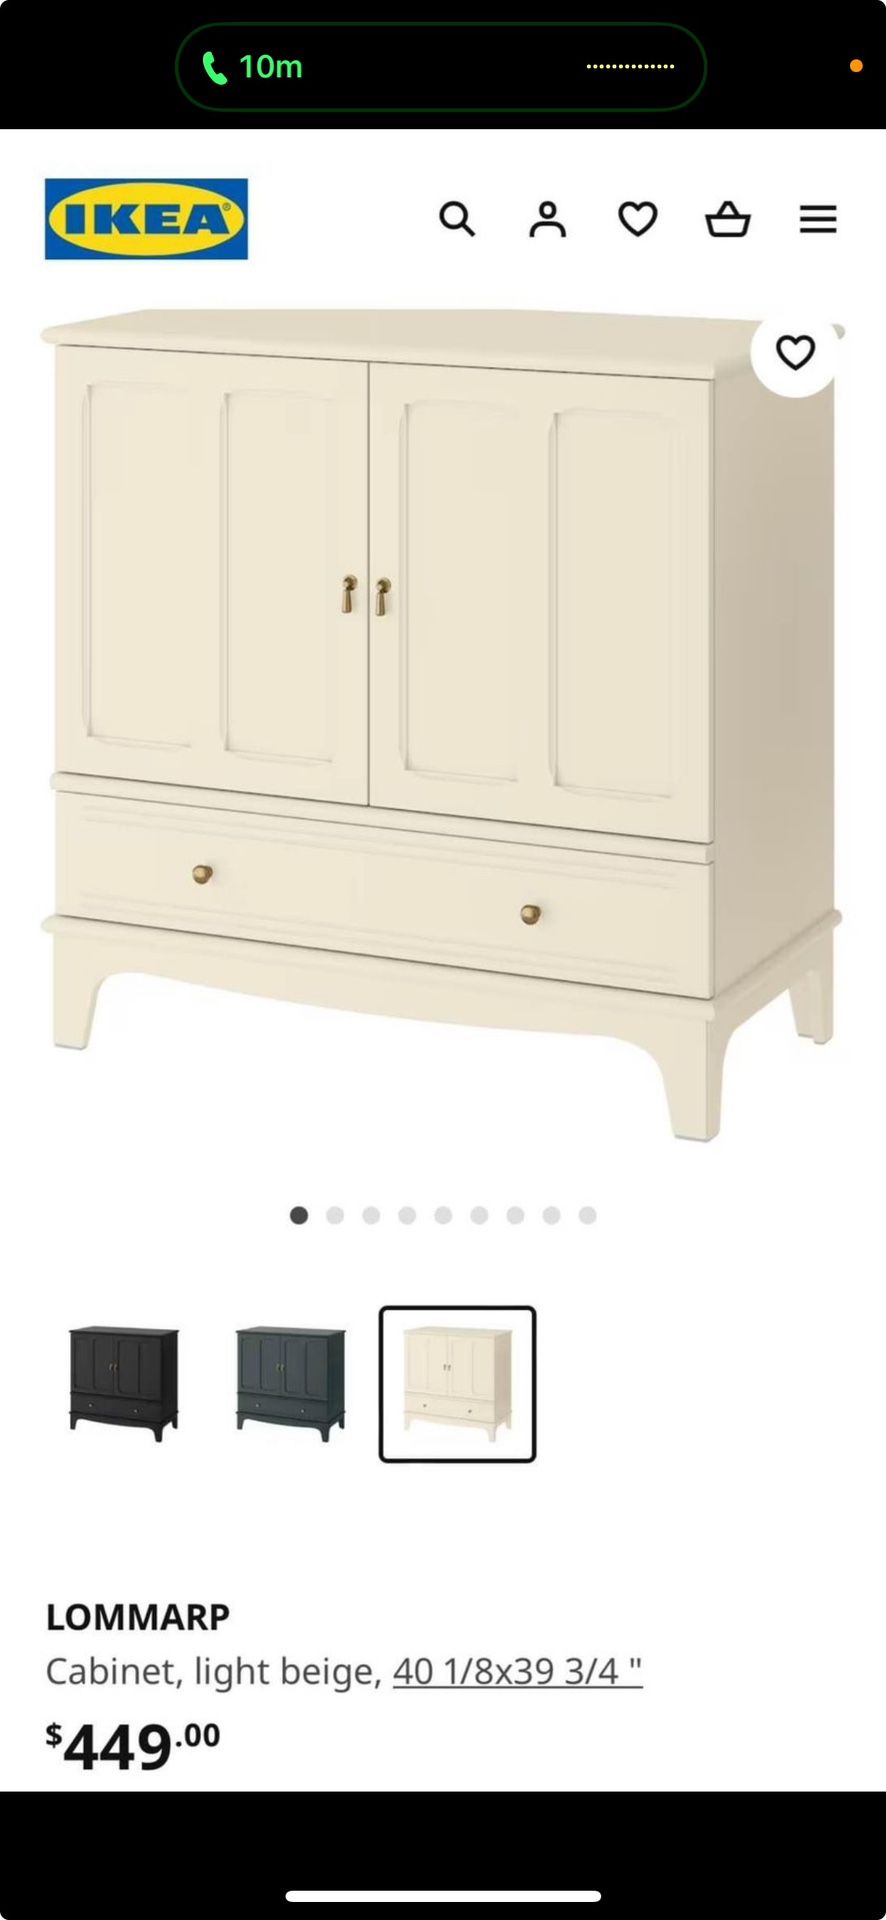 IKEA Console/Cabinet Table